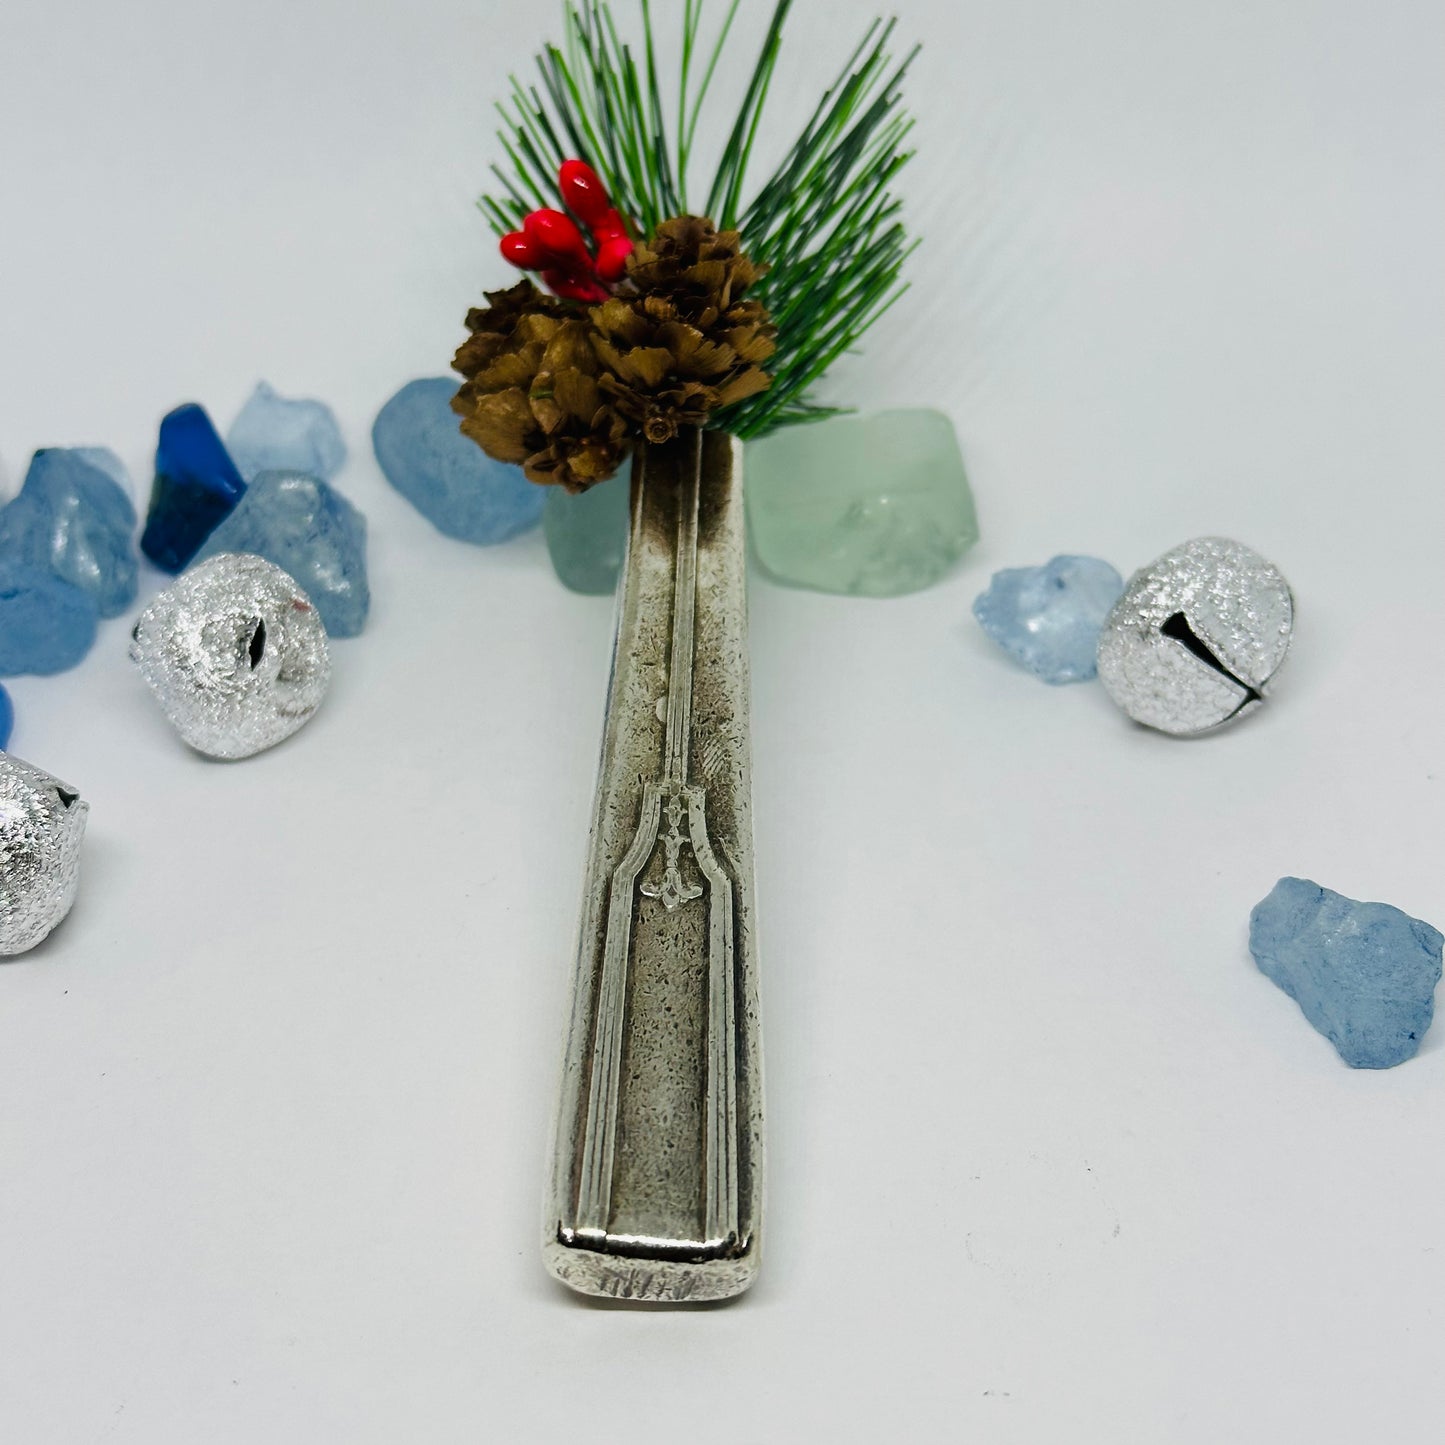 Vintage Silverware Magnetic Bud Vase | Silverplate Essential Oils Flowers | Up-Cycled Antique